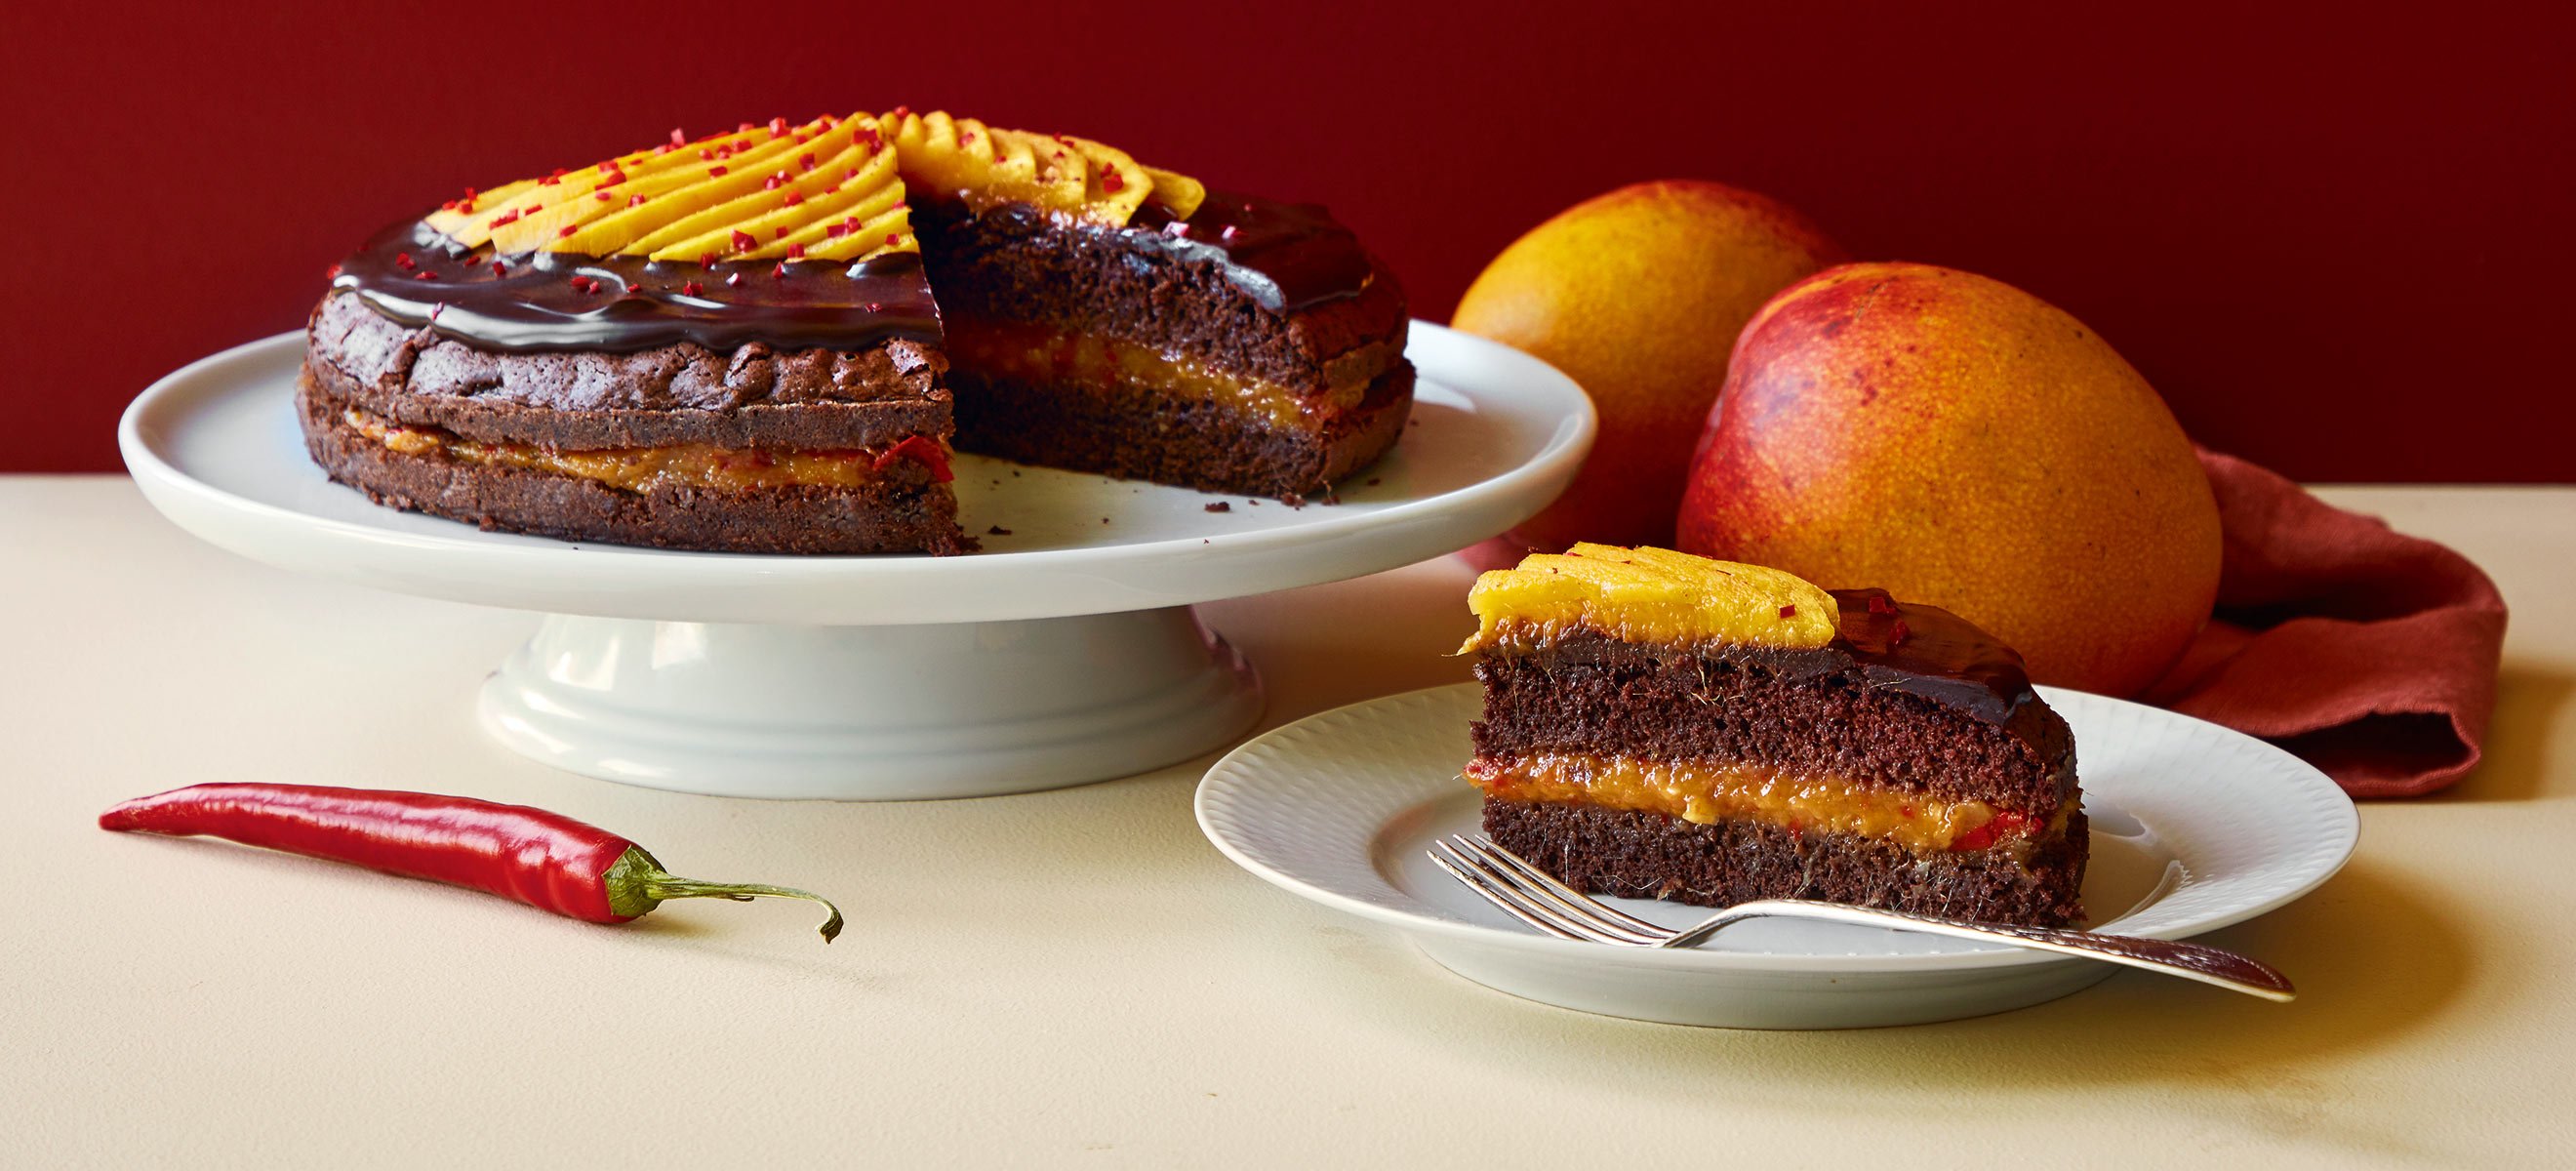 Buy Chocolate La Fusion Fresh Cake - Chocolate Mango Online at Best Price  of Rs null - bigbasket